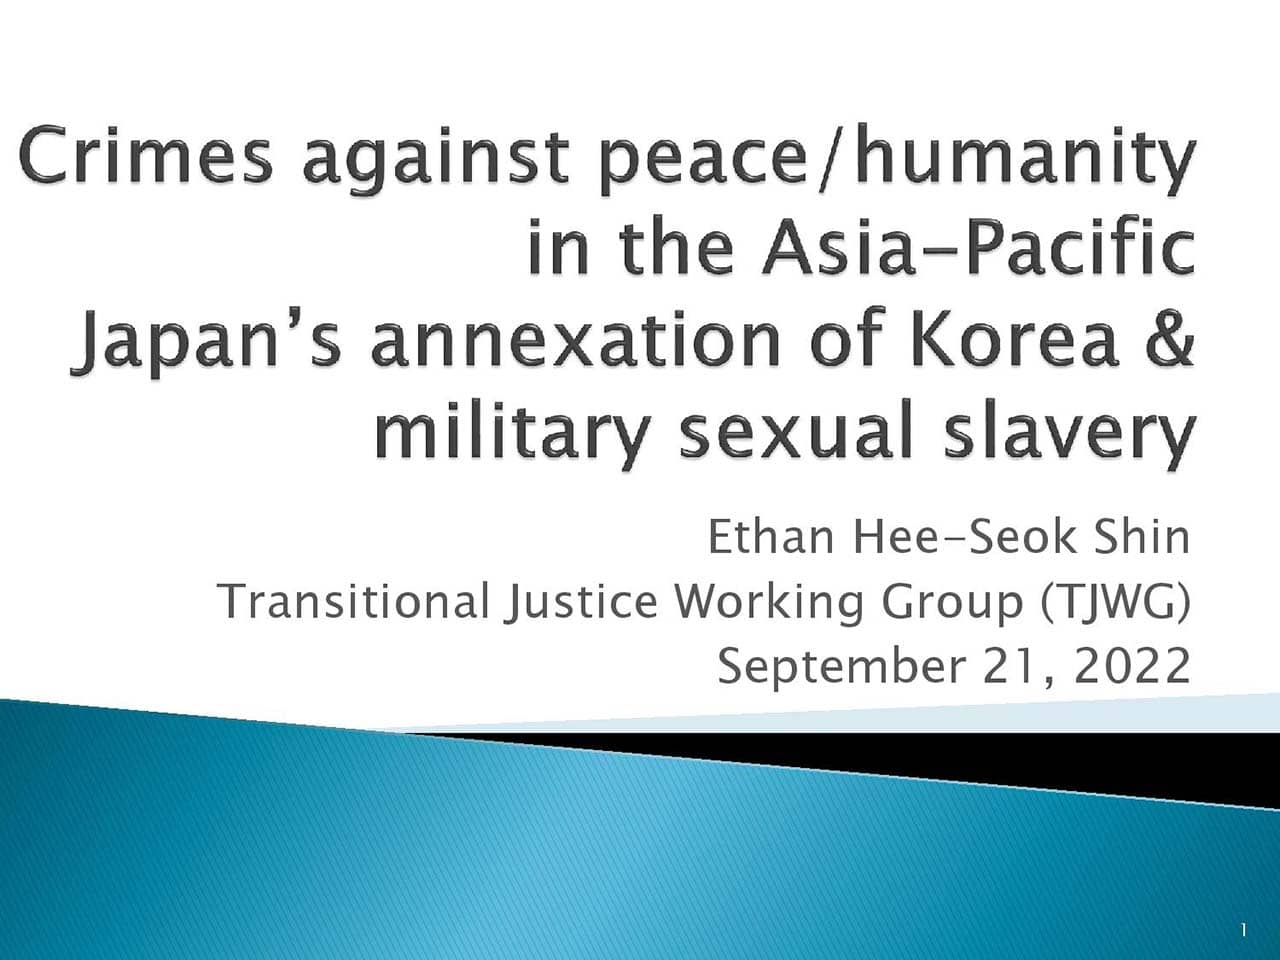 View the presentation by Dr. Ethan Hee-Seok Shin, Catholic University of Korean